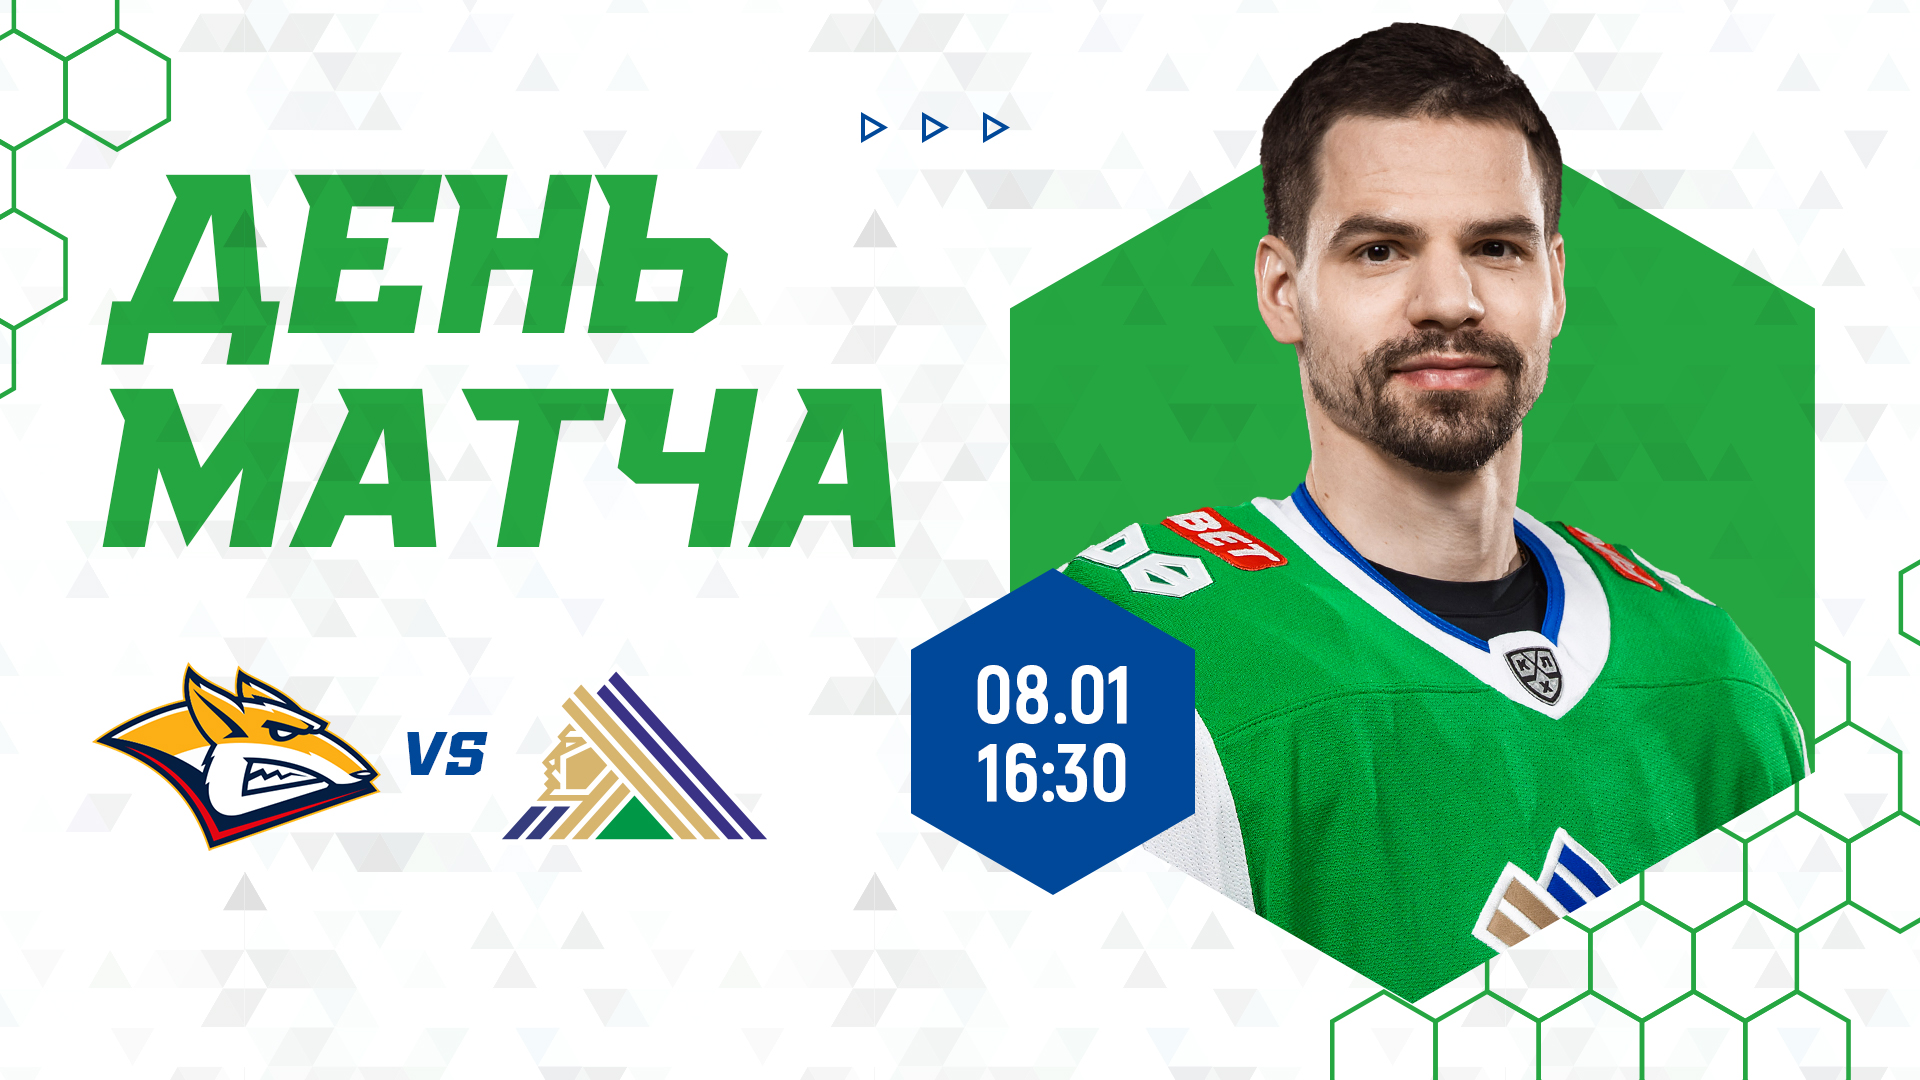 «Металлург» vs «Салават Юлаев», начало игры в 16:30